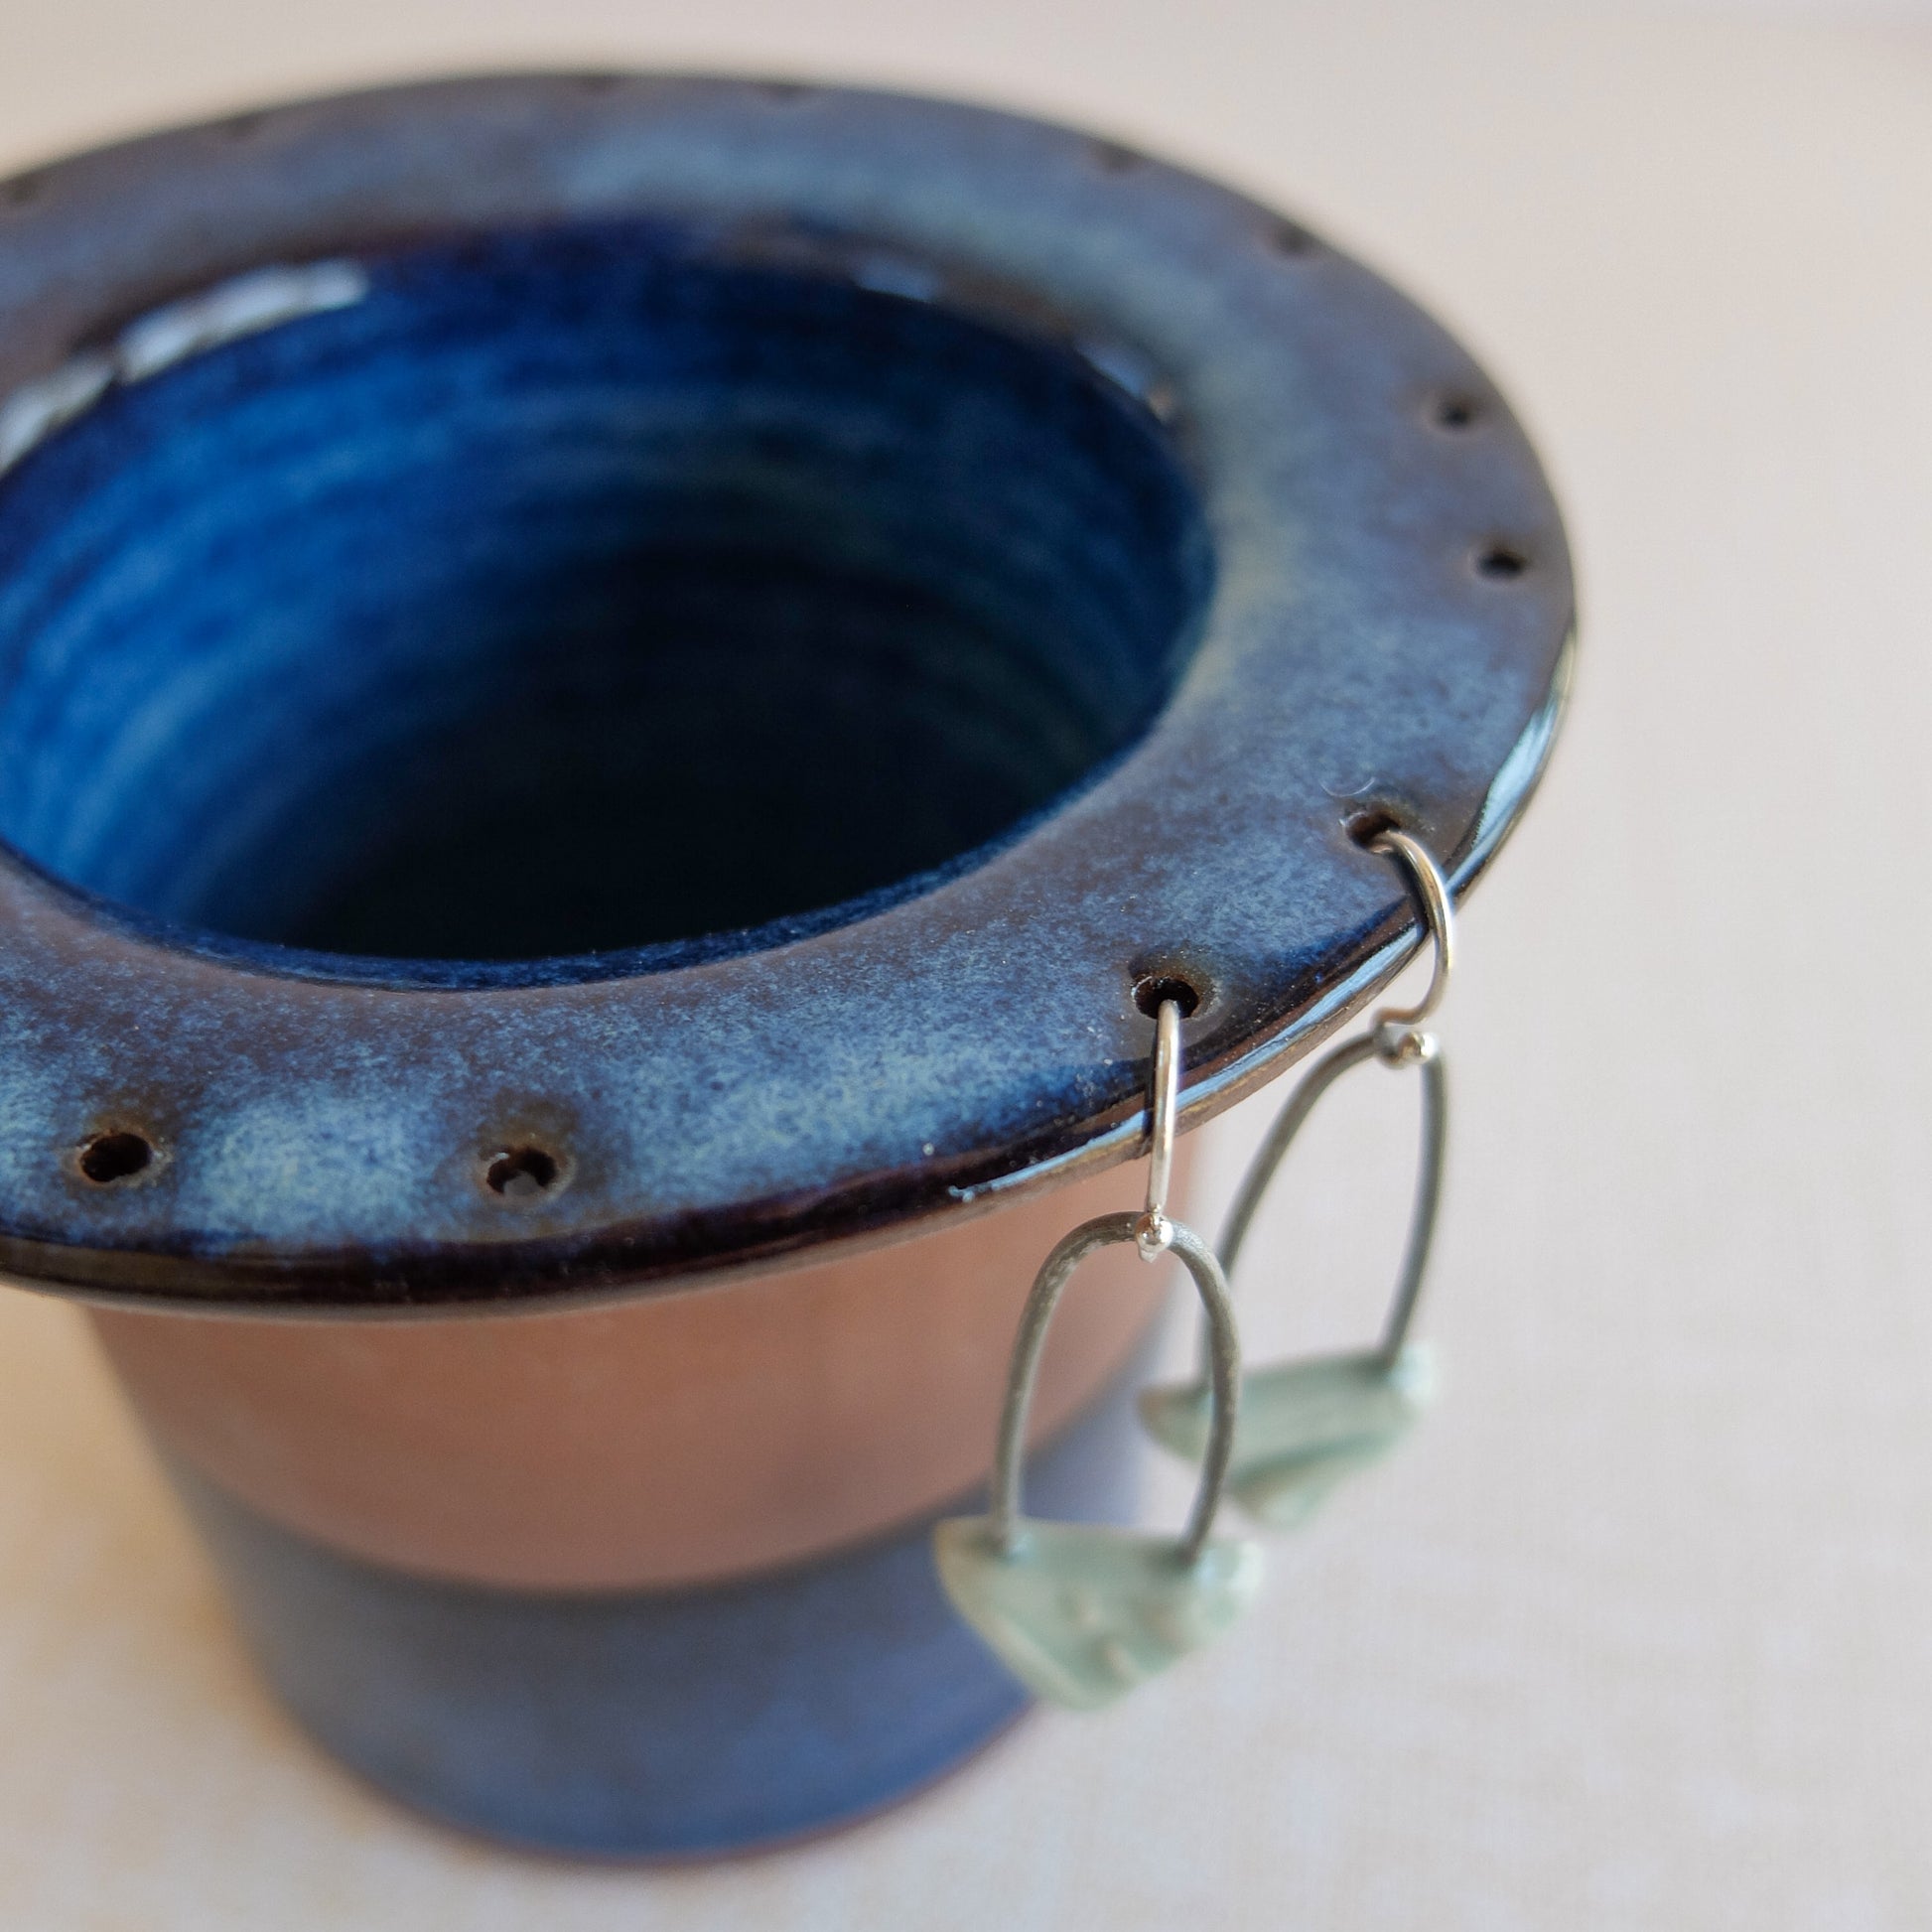 Detail shot of handmade clay earring storage pot